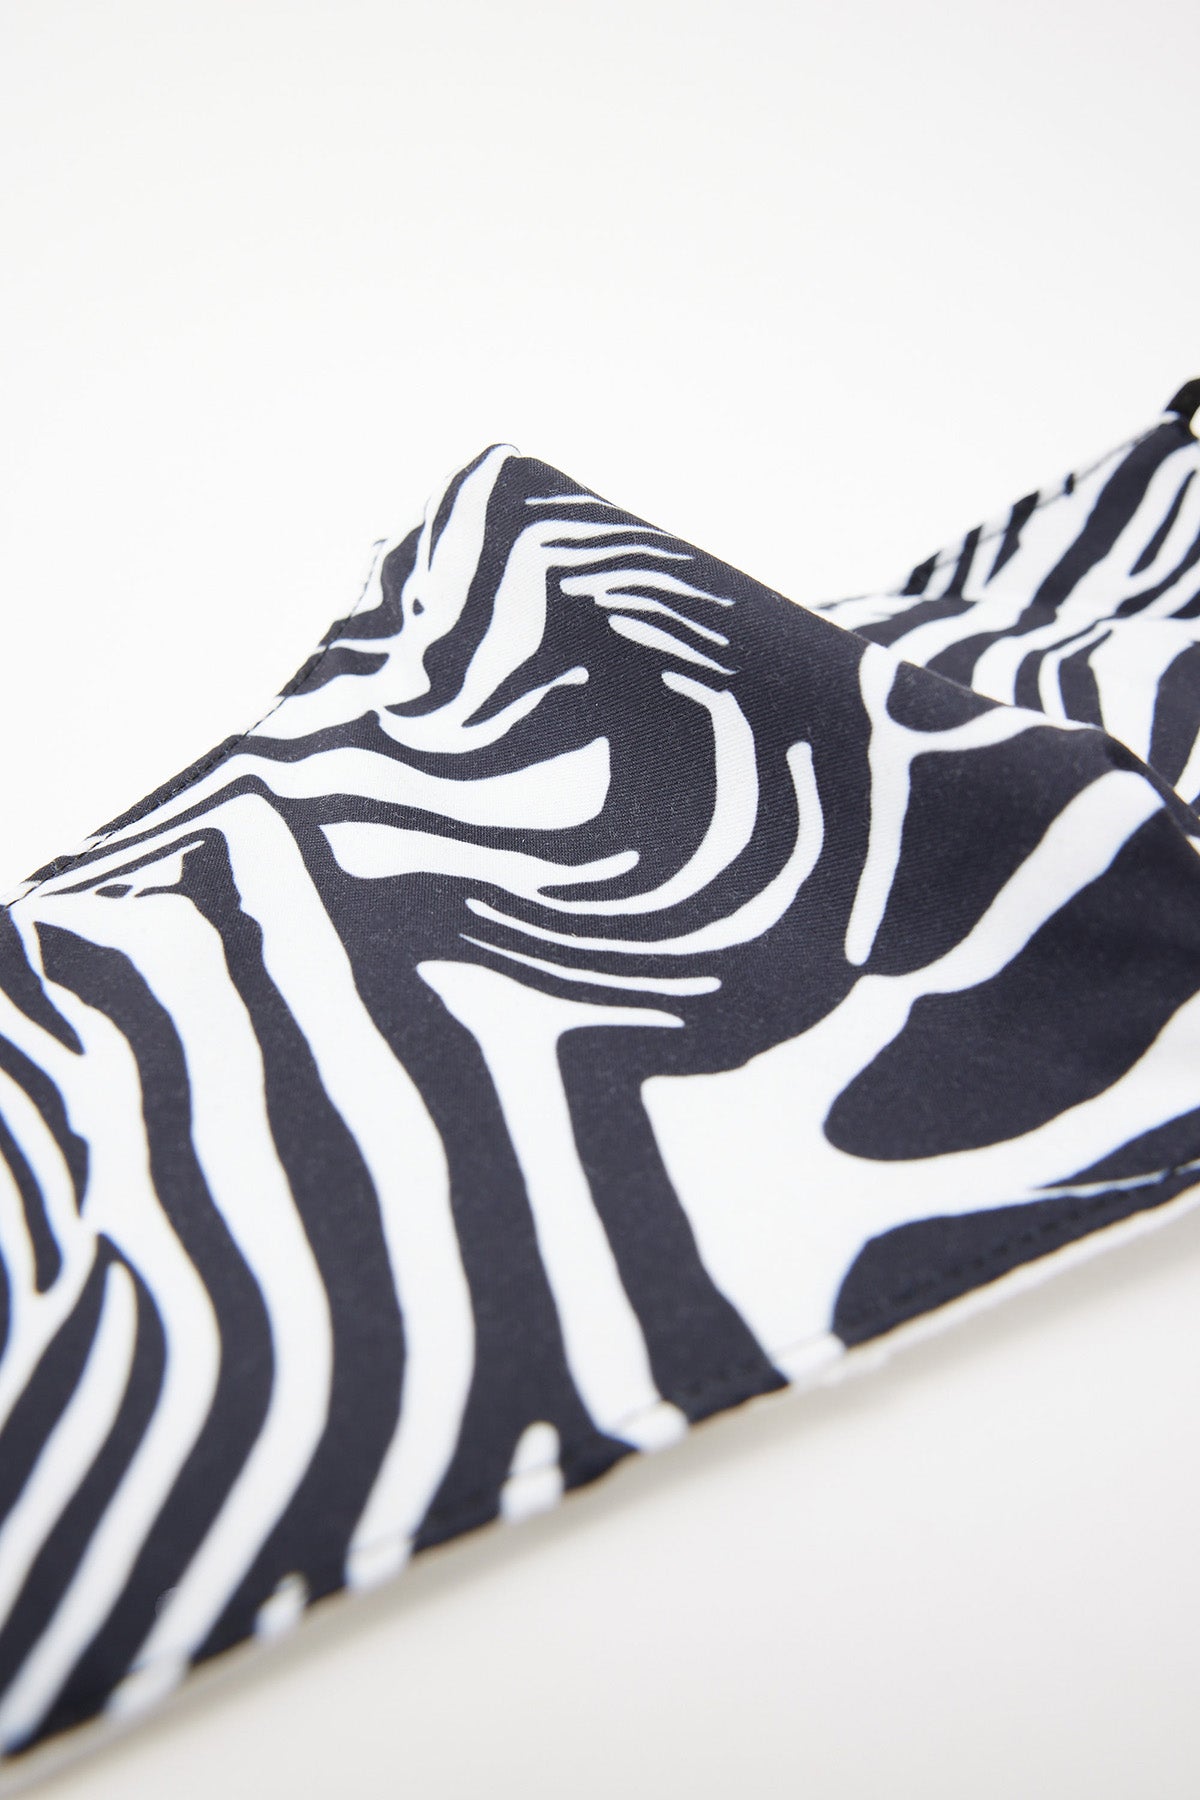 Token Zebra Face Mask Zebra Print